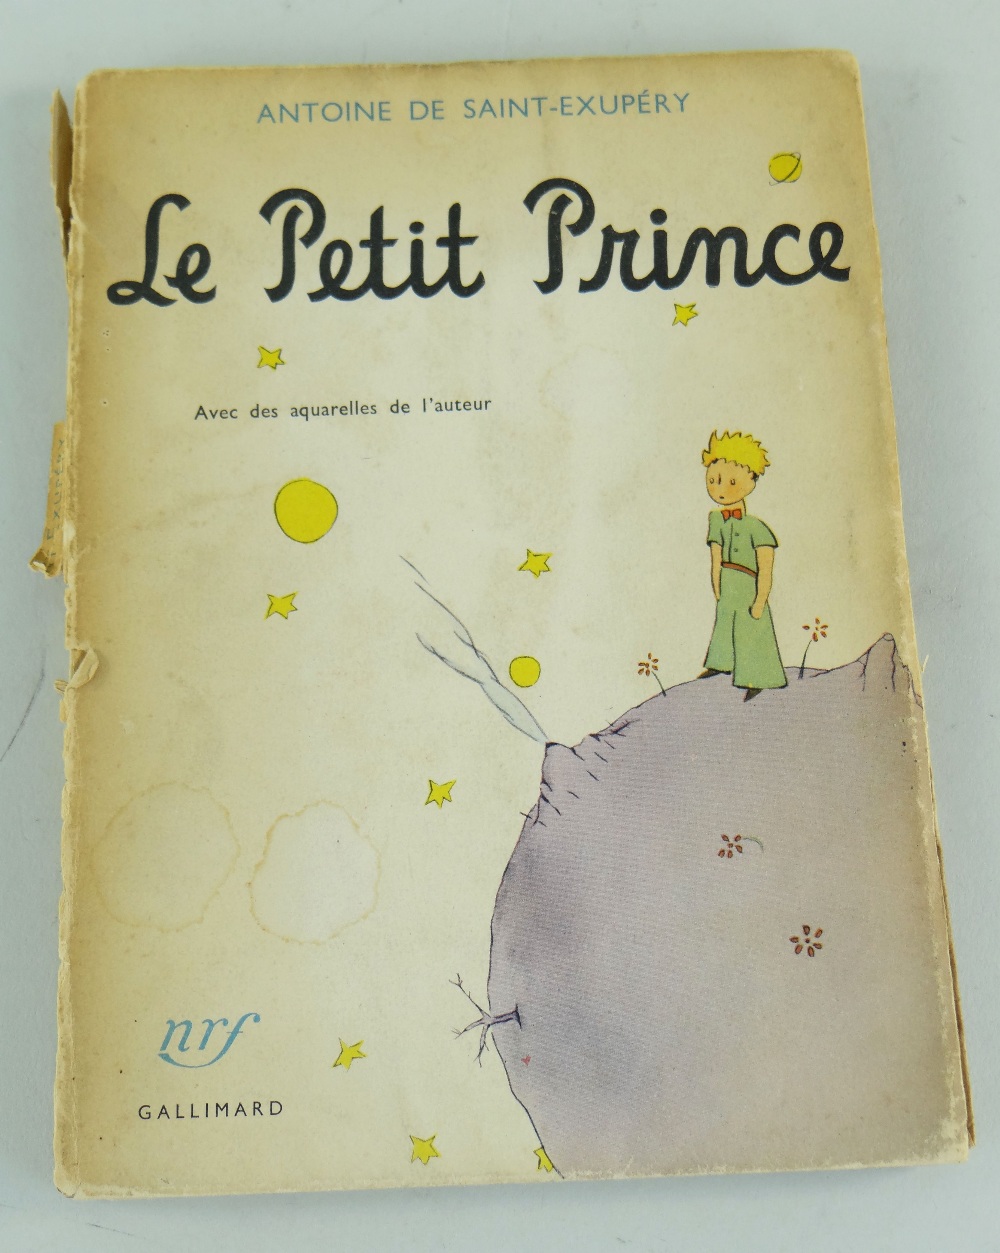 DE SAINT-EXUPERY (ANTOINE) 'Le Petit Prince', copyright text and illustration by Libraire Gallimard